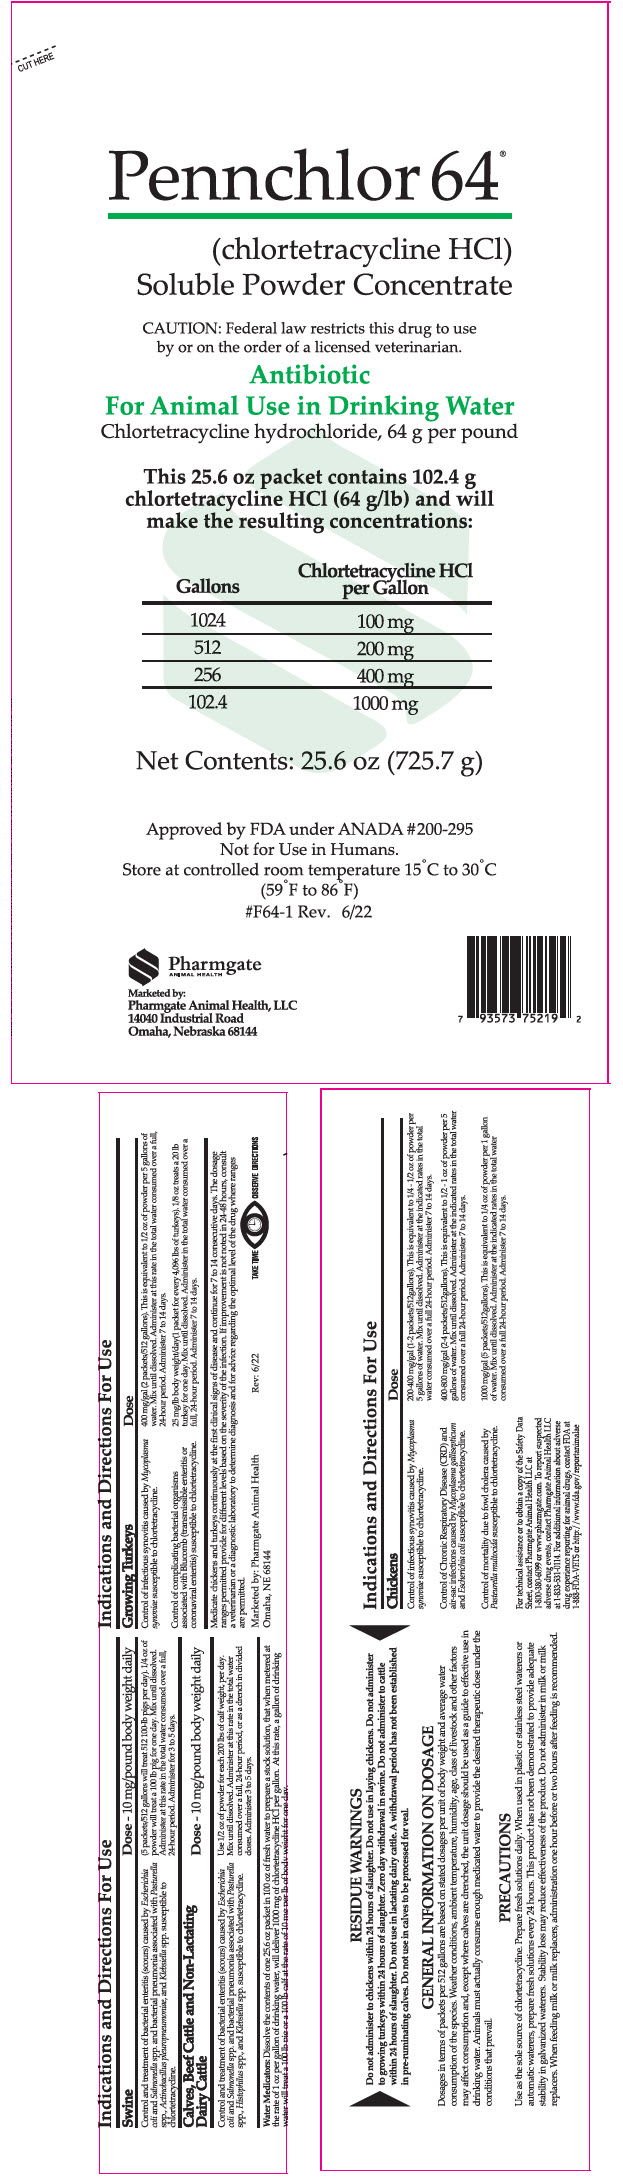 PRINCIPAL DISPLAY PANEL - 725.7 g Packet Label